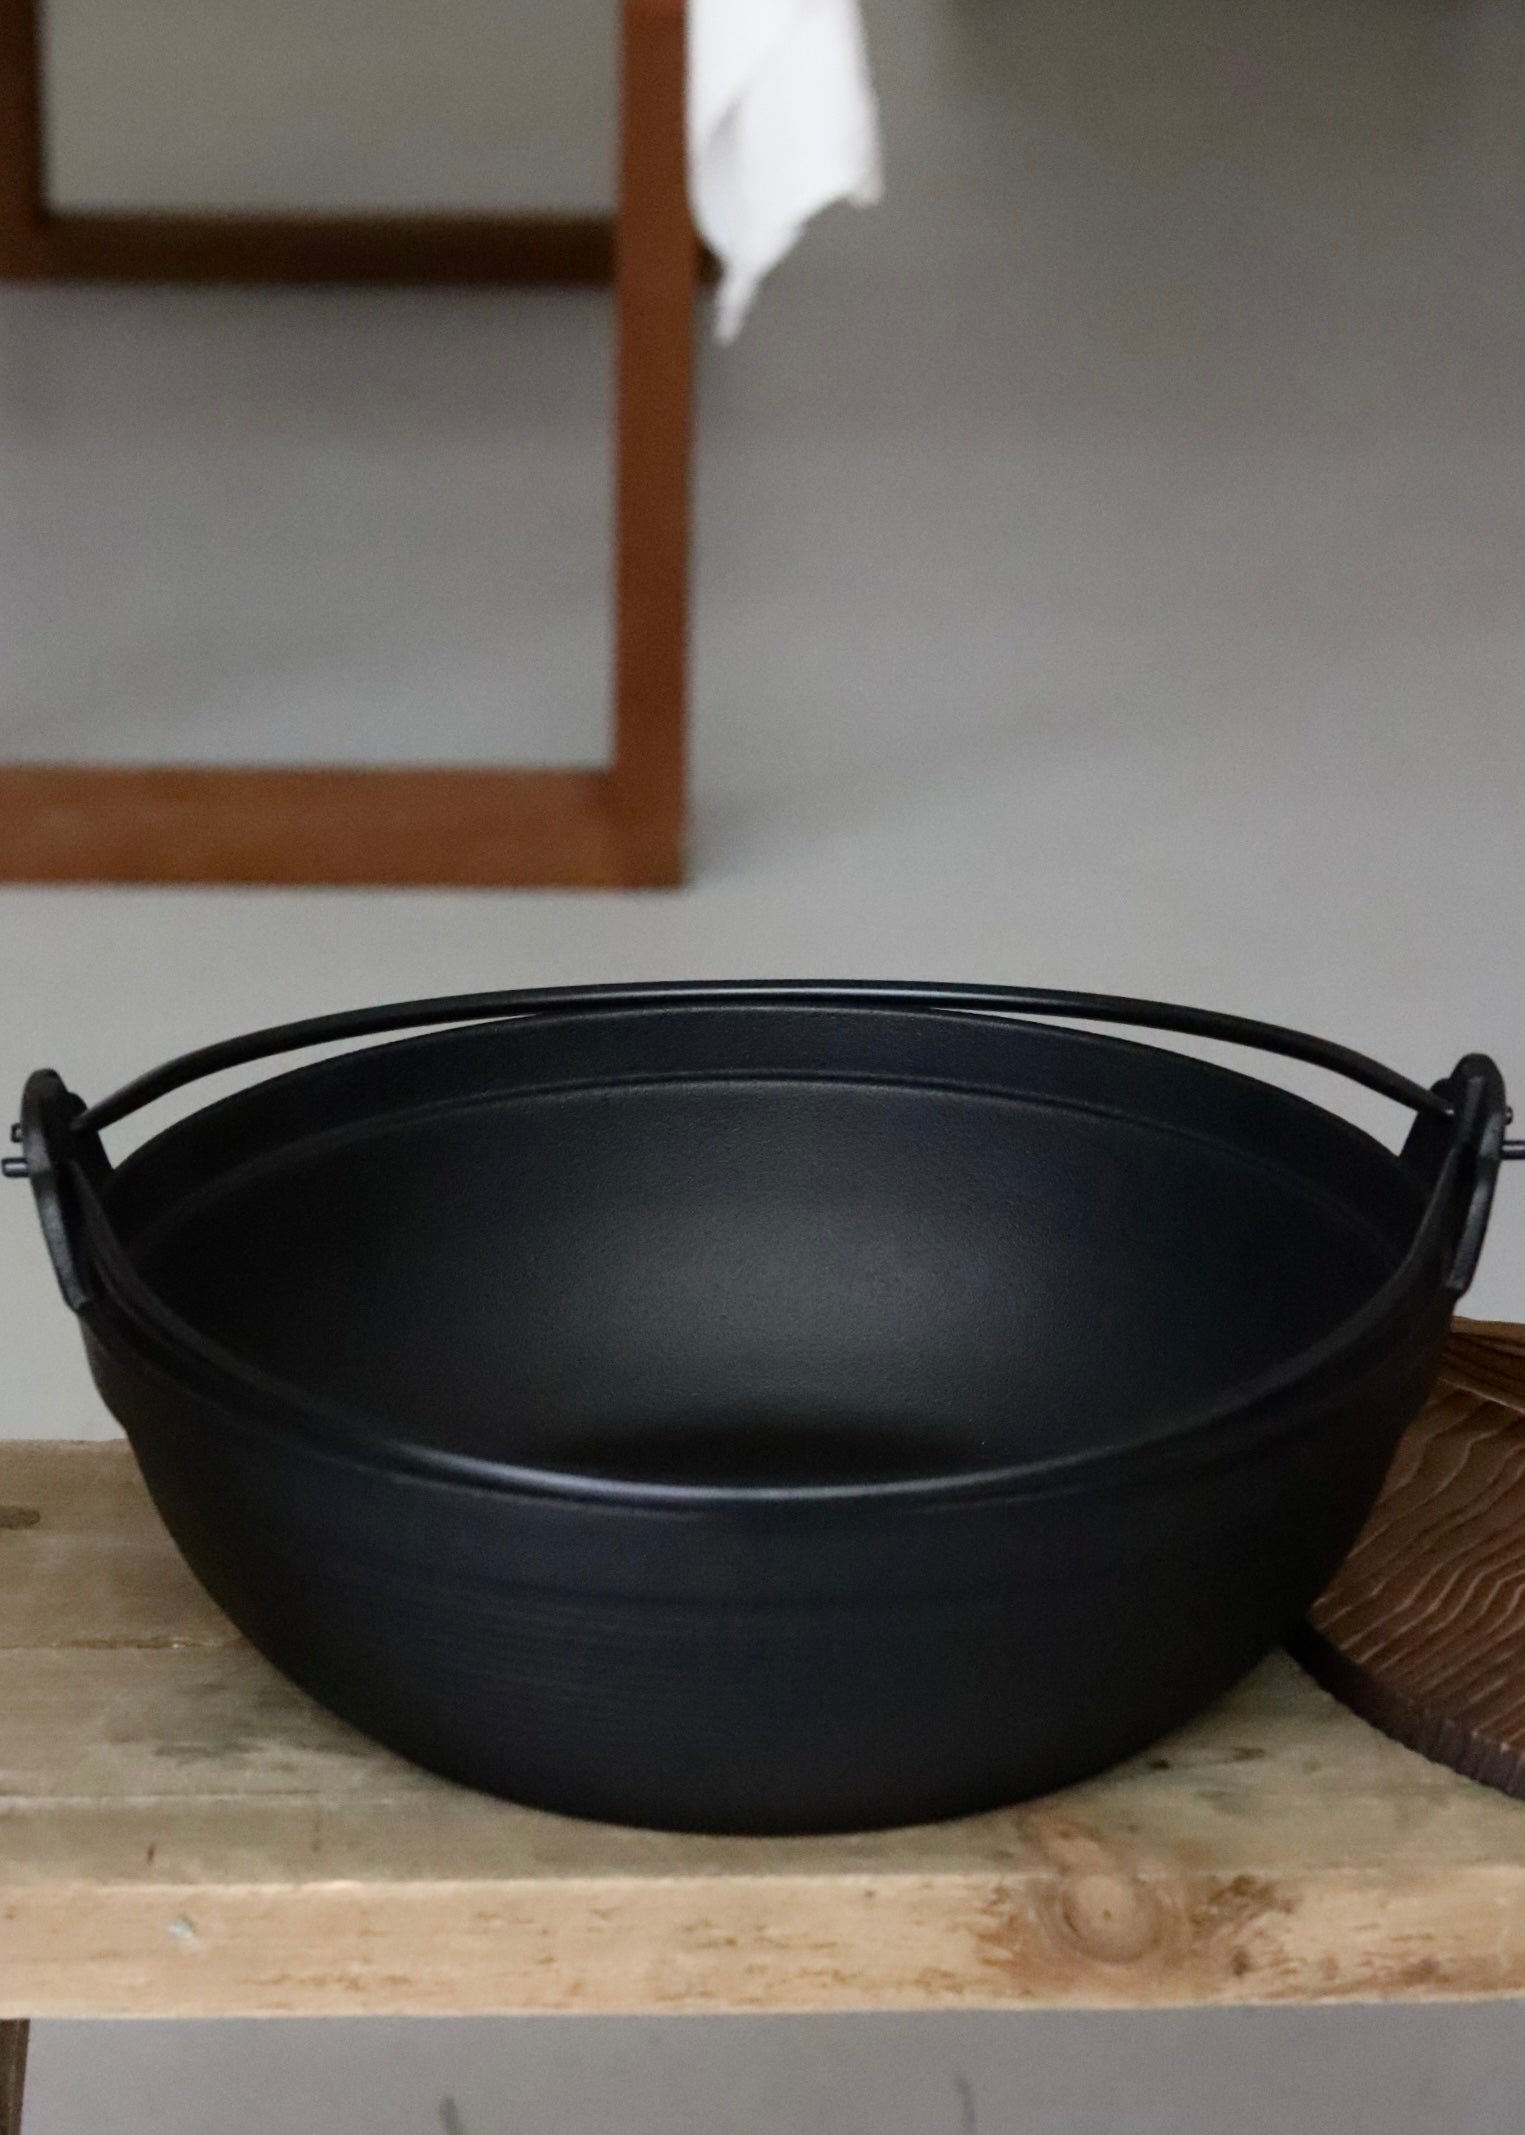 IWACHU Iron Cooking Pot